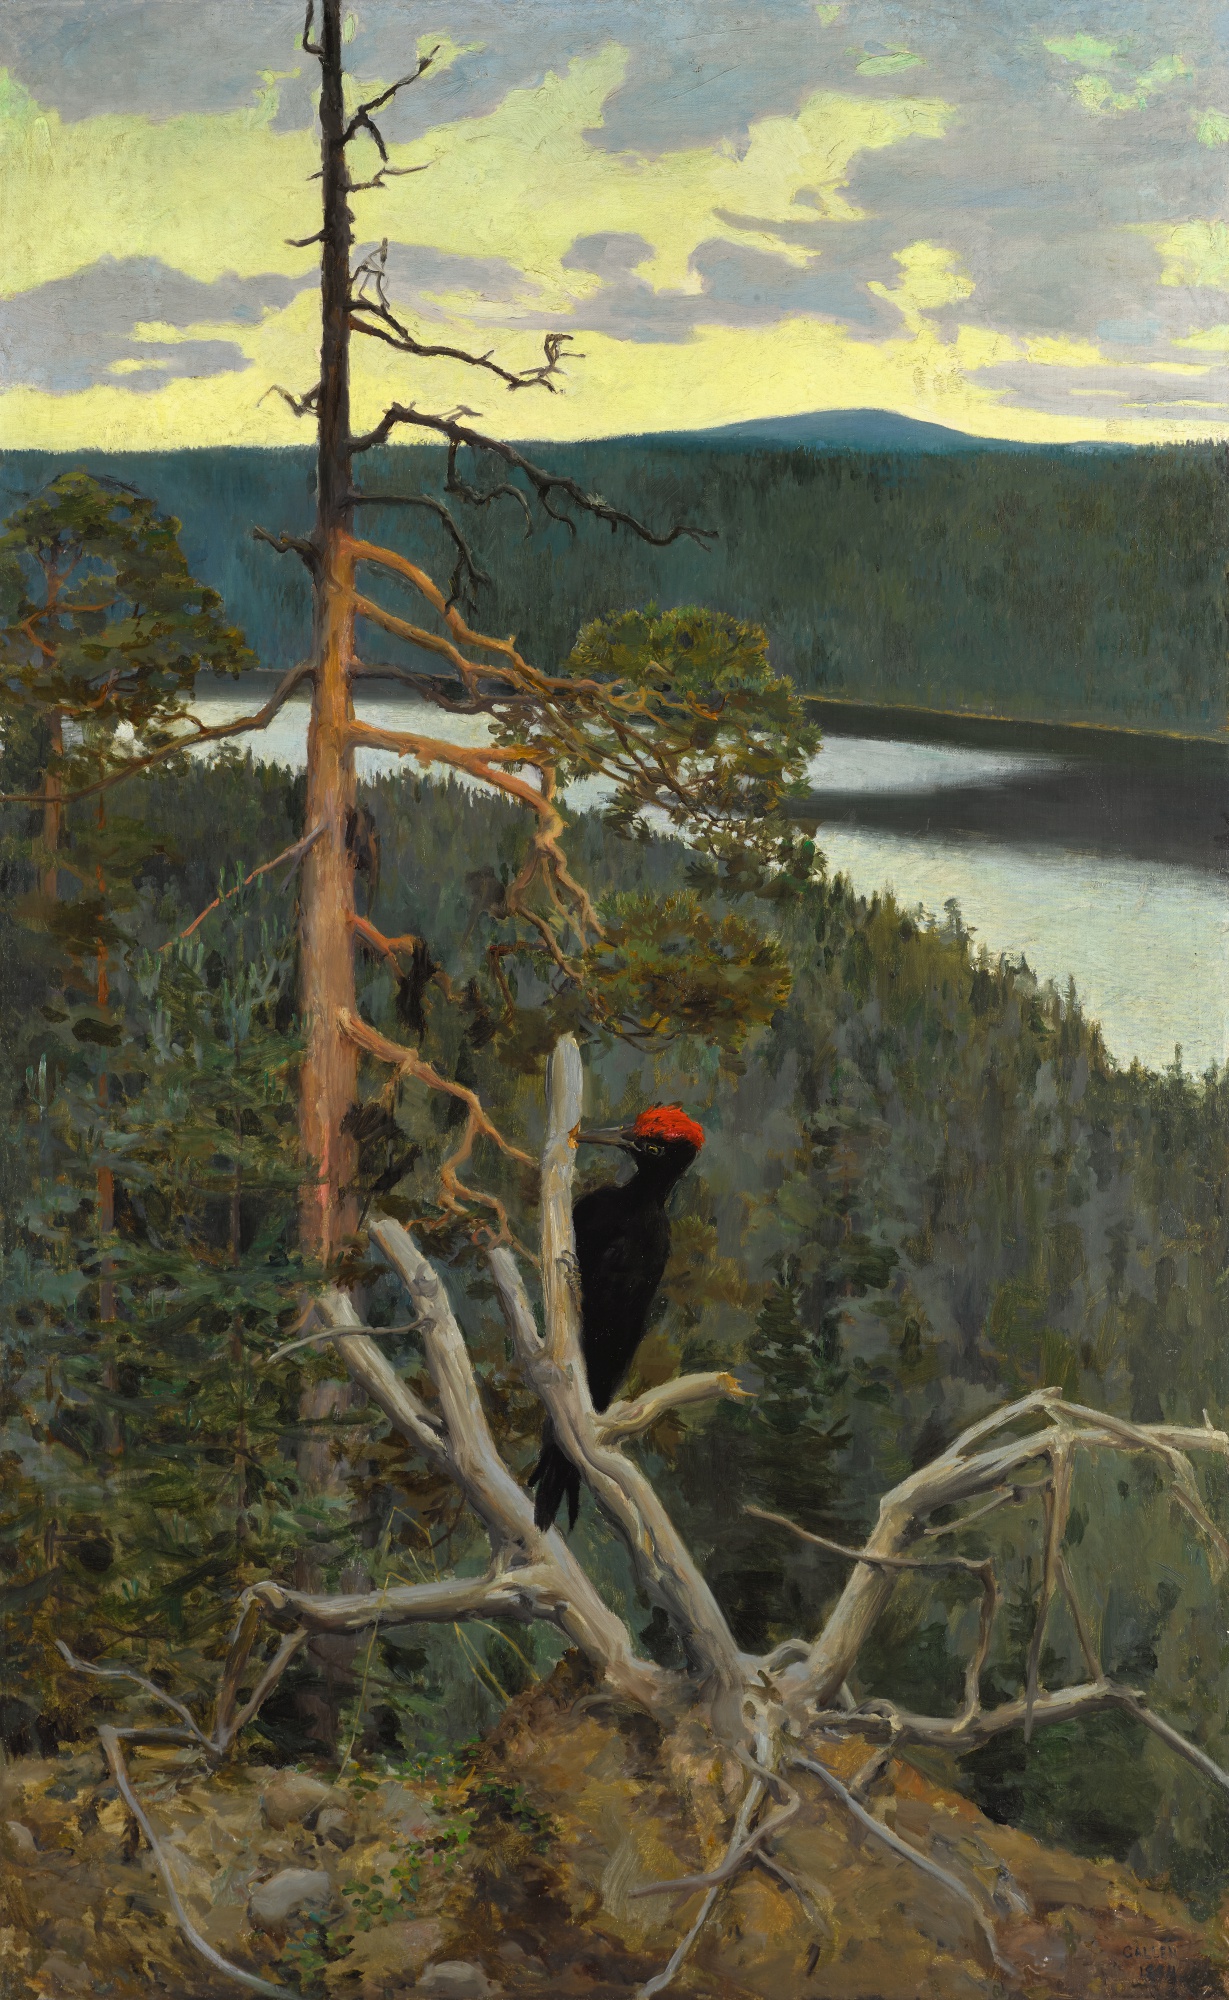 Palokärki (Kara Ağaçkakan) (orig. "Palokärki (Black Woodpecker)") by Akseli Gallen-Kallela - 1894 - 145 x 91 cm özel koleksiyon